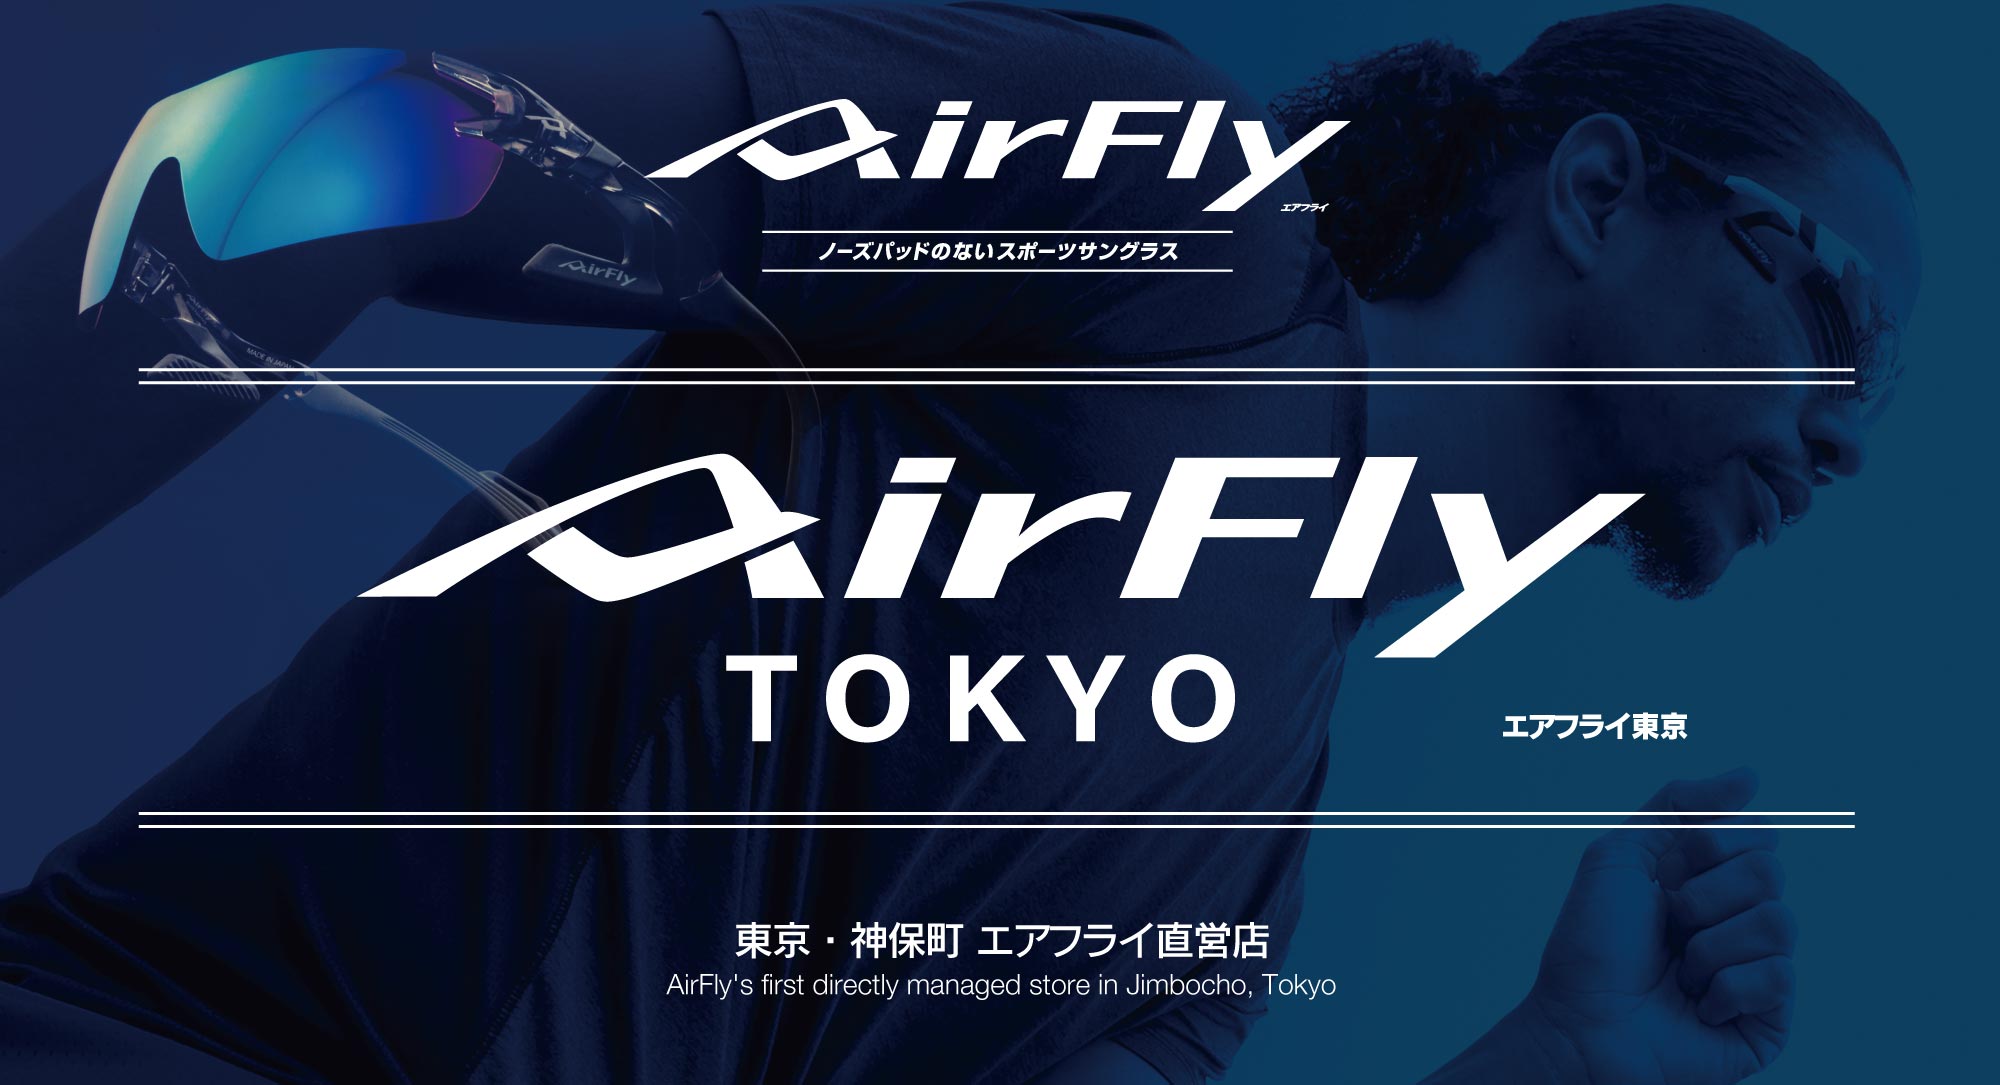 AirFly TOKYO 体験試着実走会のお知らせ